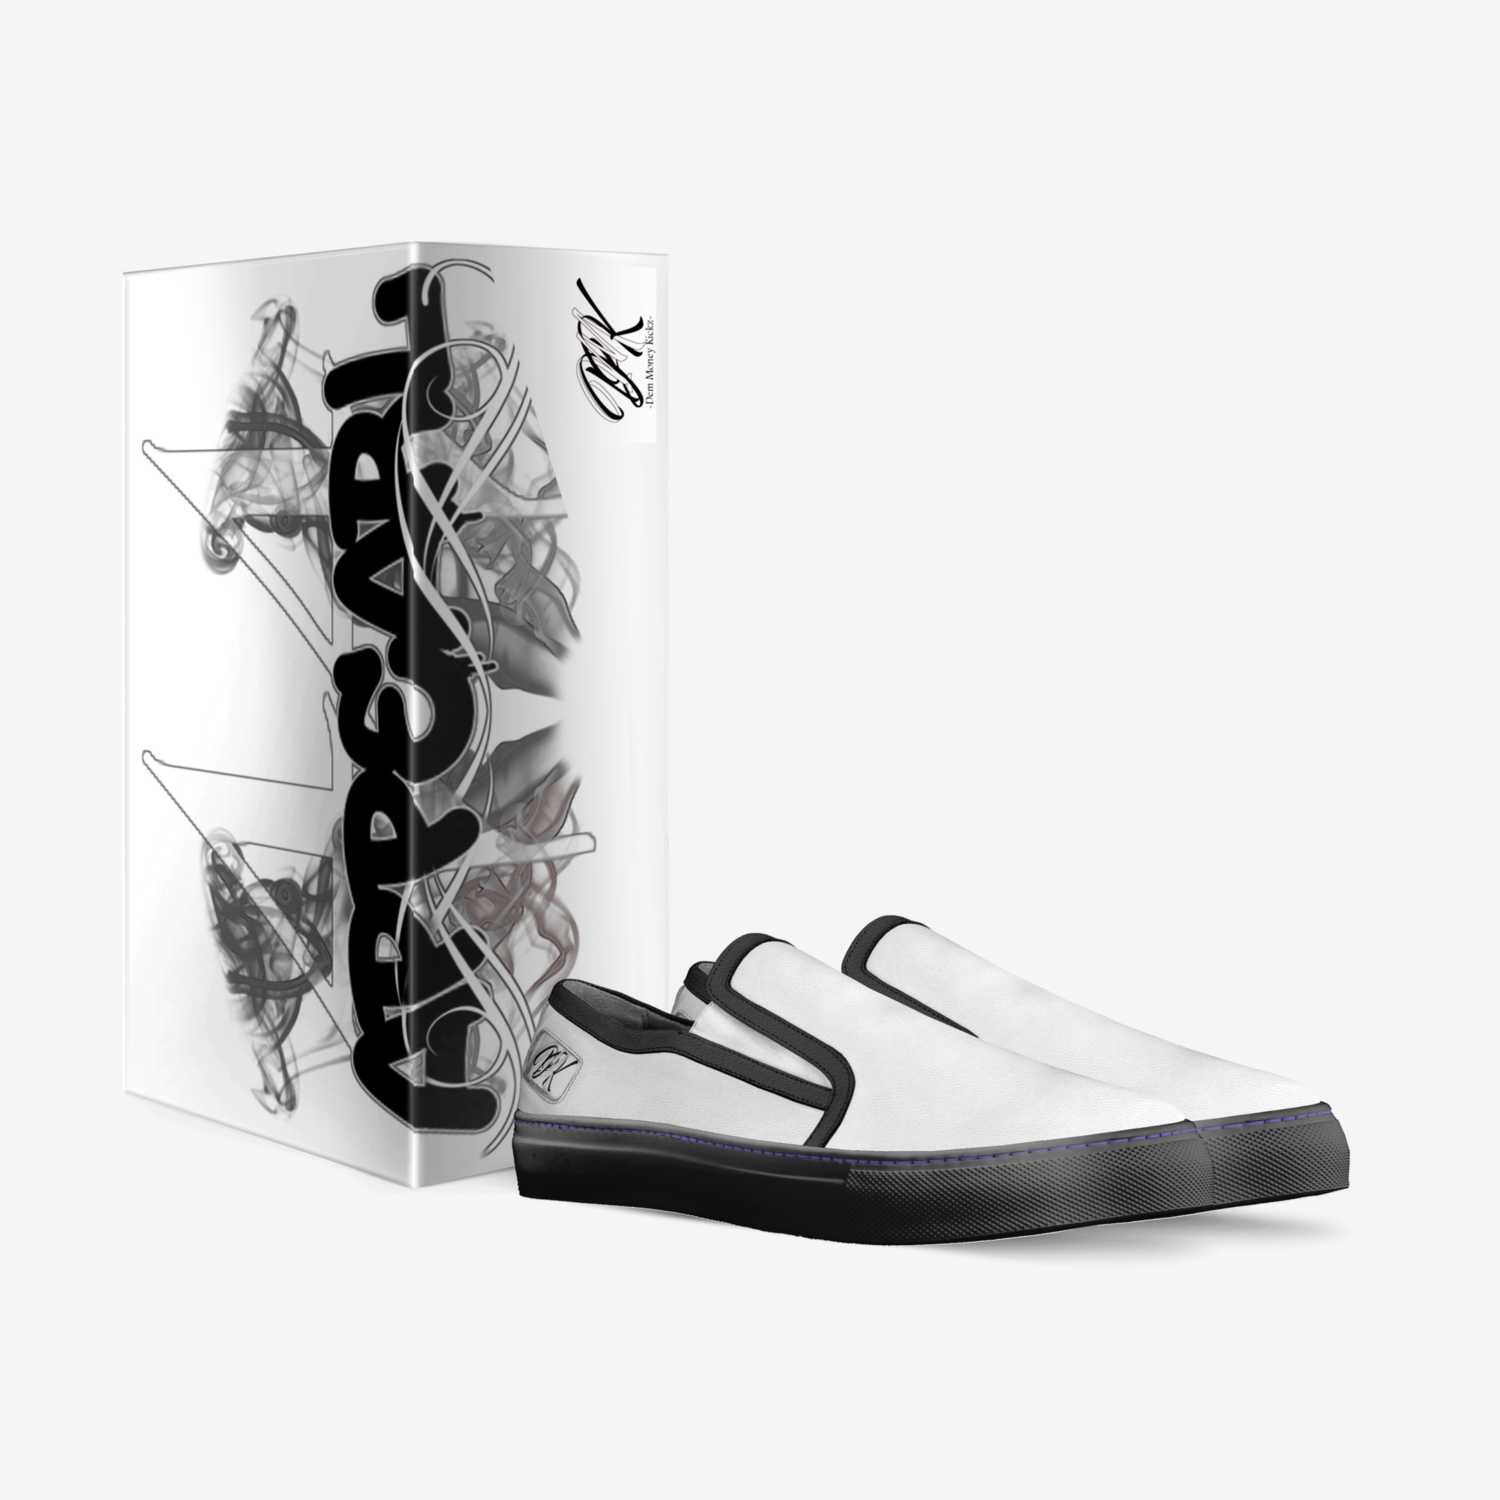 Dem Money Kickz custom made in Italy shoes by Dmoney1644 Lockett | Box view